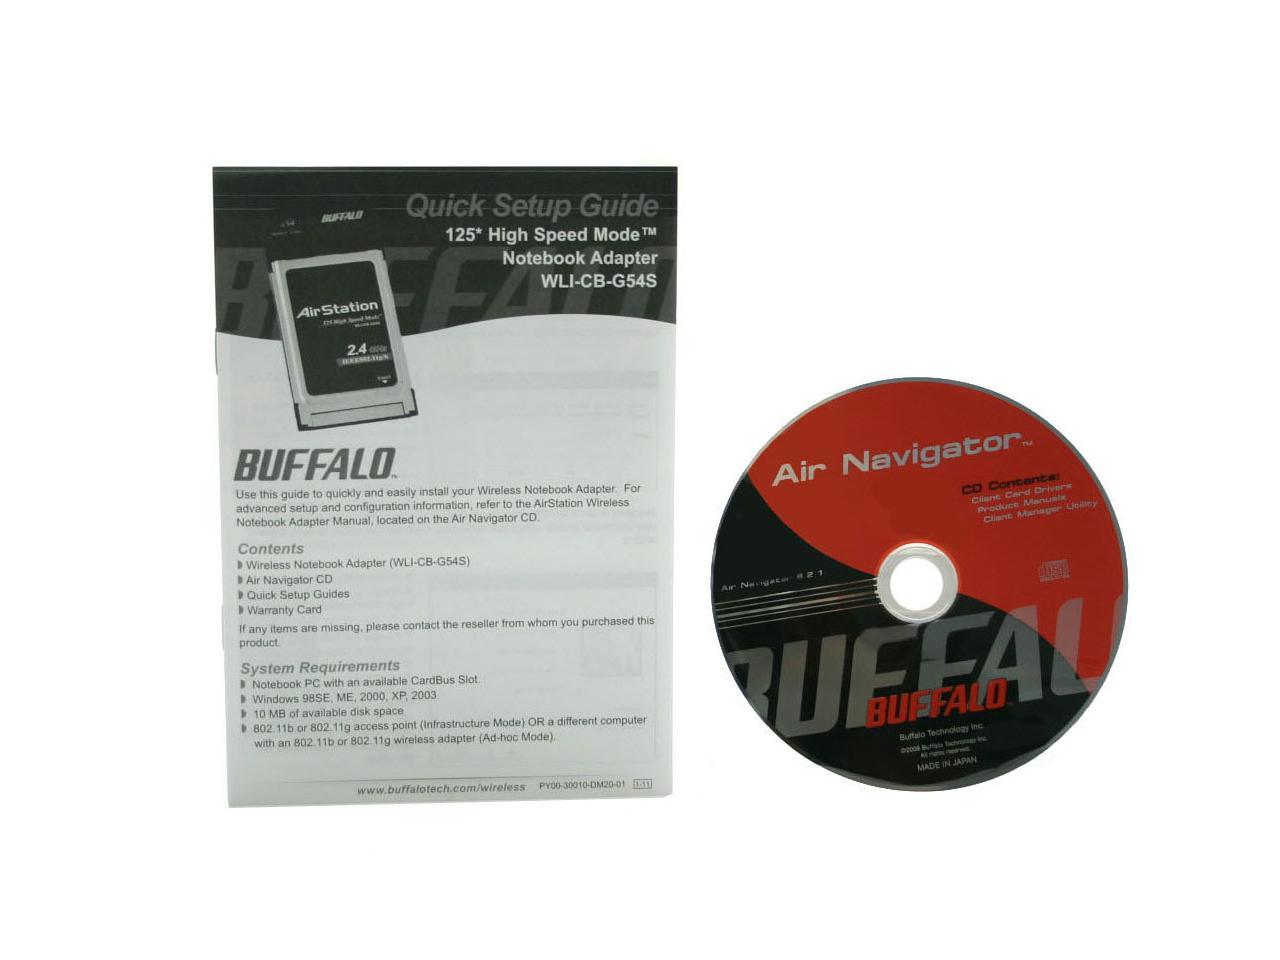 BUFFALO WLI-CB-G54S Wireless-G 125 High-Speed Notebook Adapter - Newegg.com